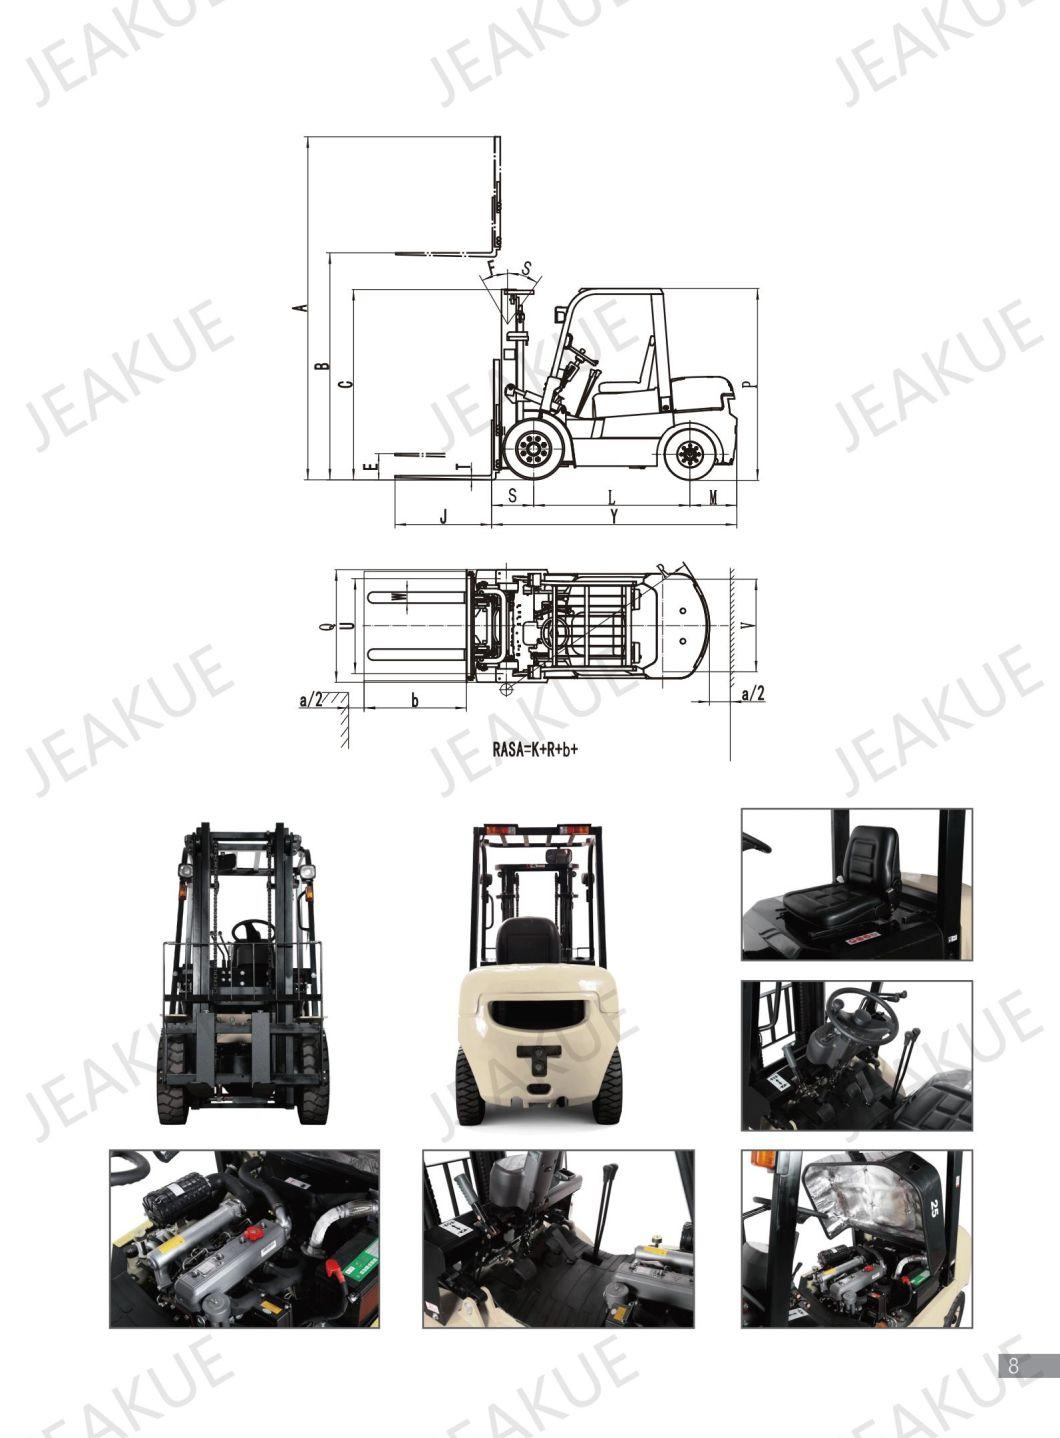 3ton Diesel Forklift with CE Forklift Truck Telehandler